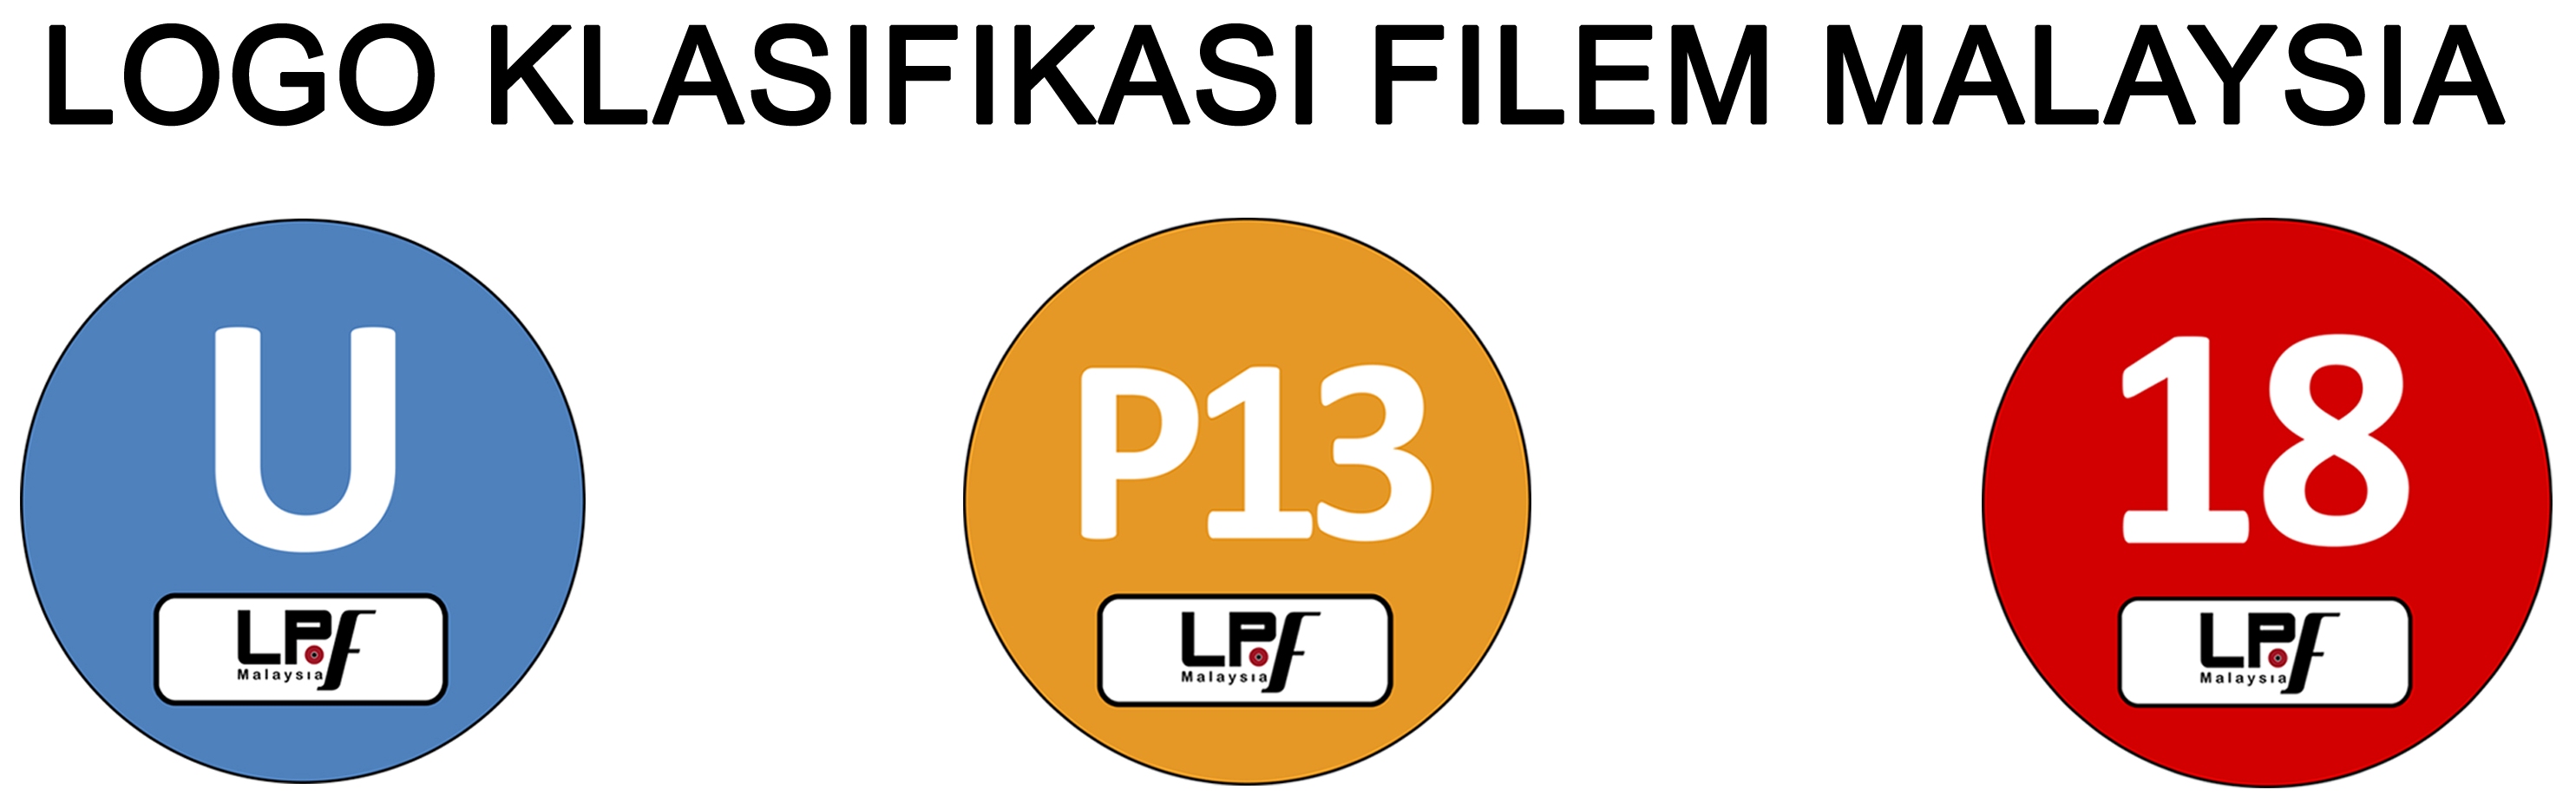 Malaysian_film_classification_logos.jpg